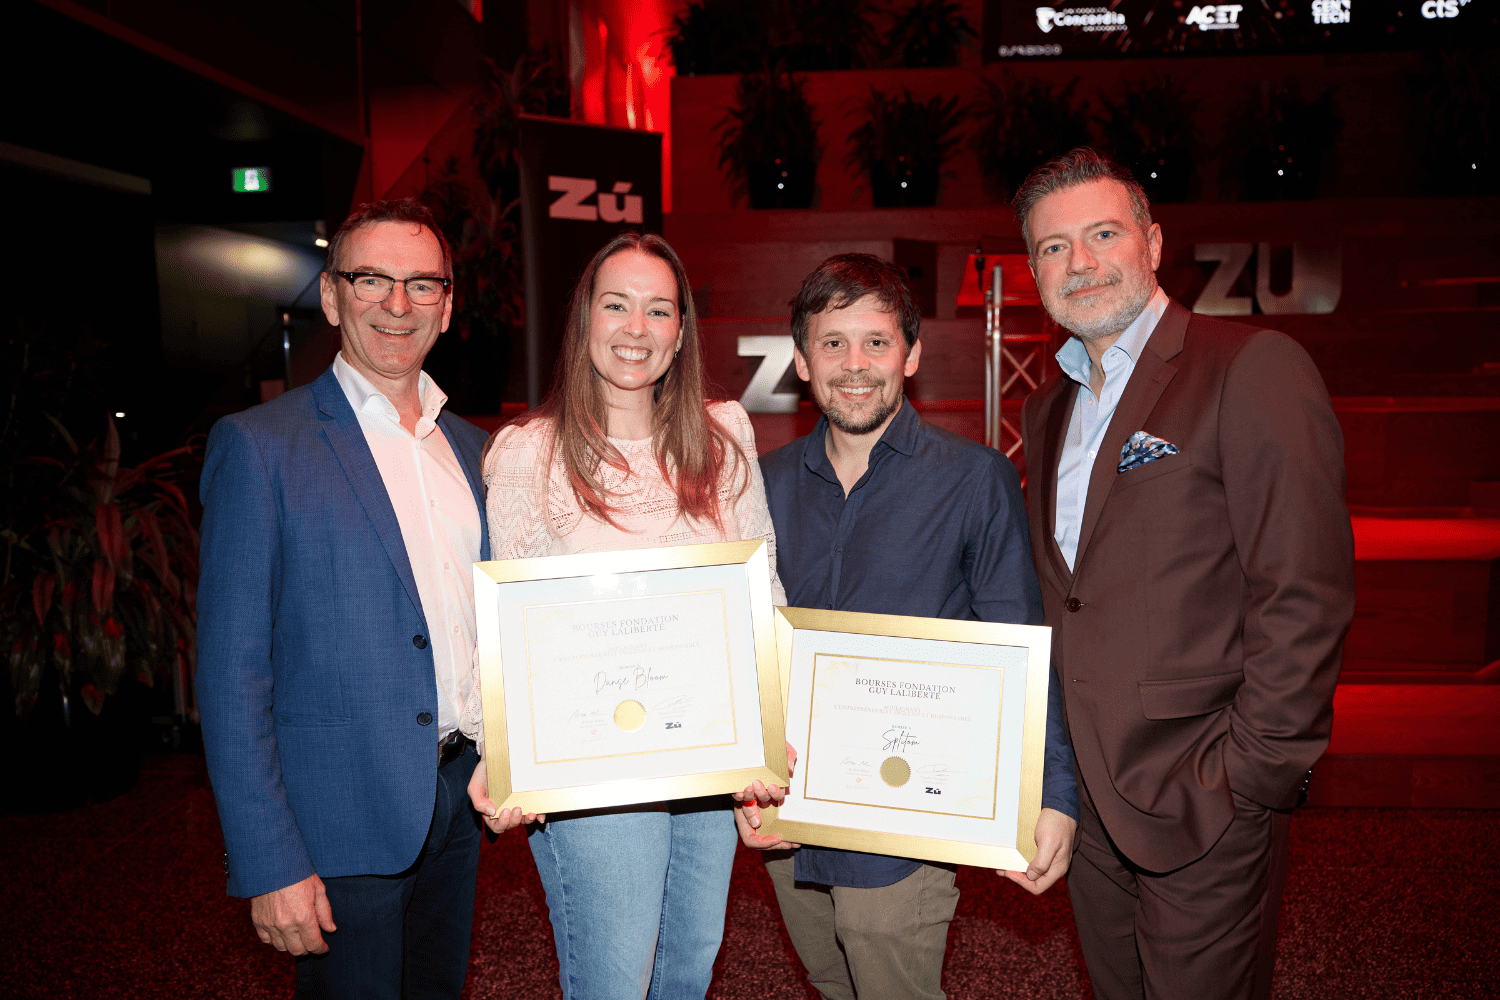 Dimitri Gourdin awards Guy Laliberté Grants to two startup entrepreneurs at Zú